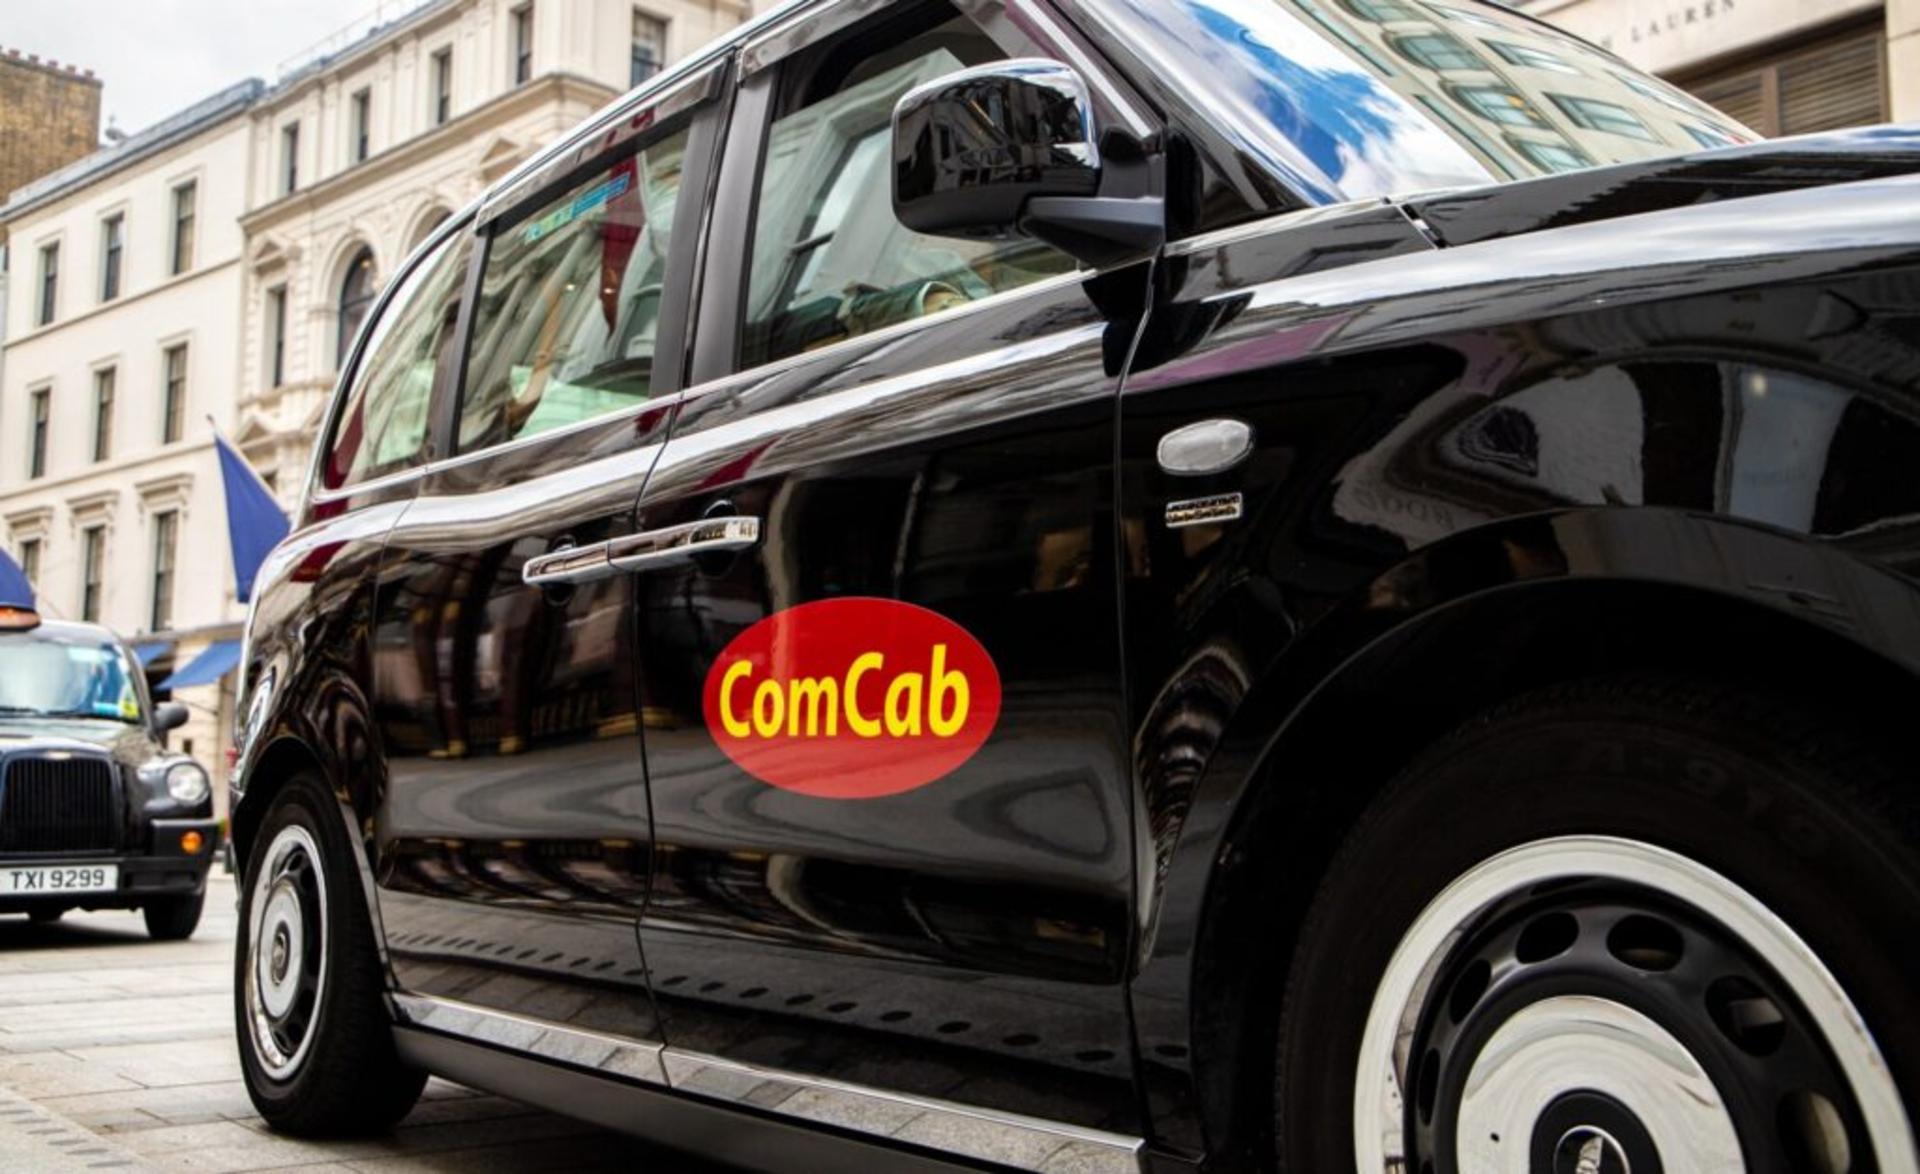 Addison Lee creates London’s biggest cab company with ComCab acquisition